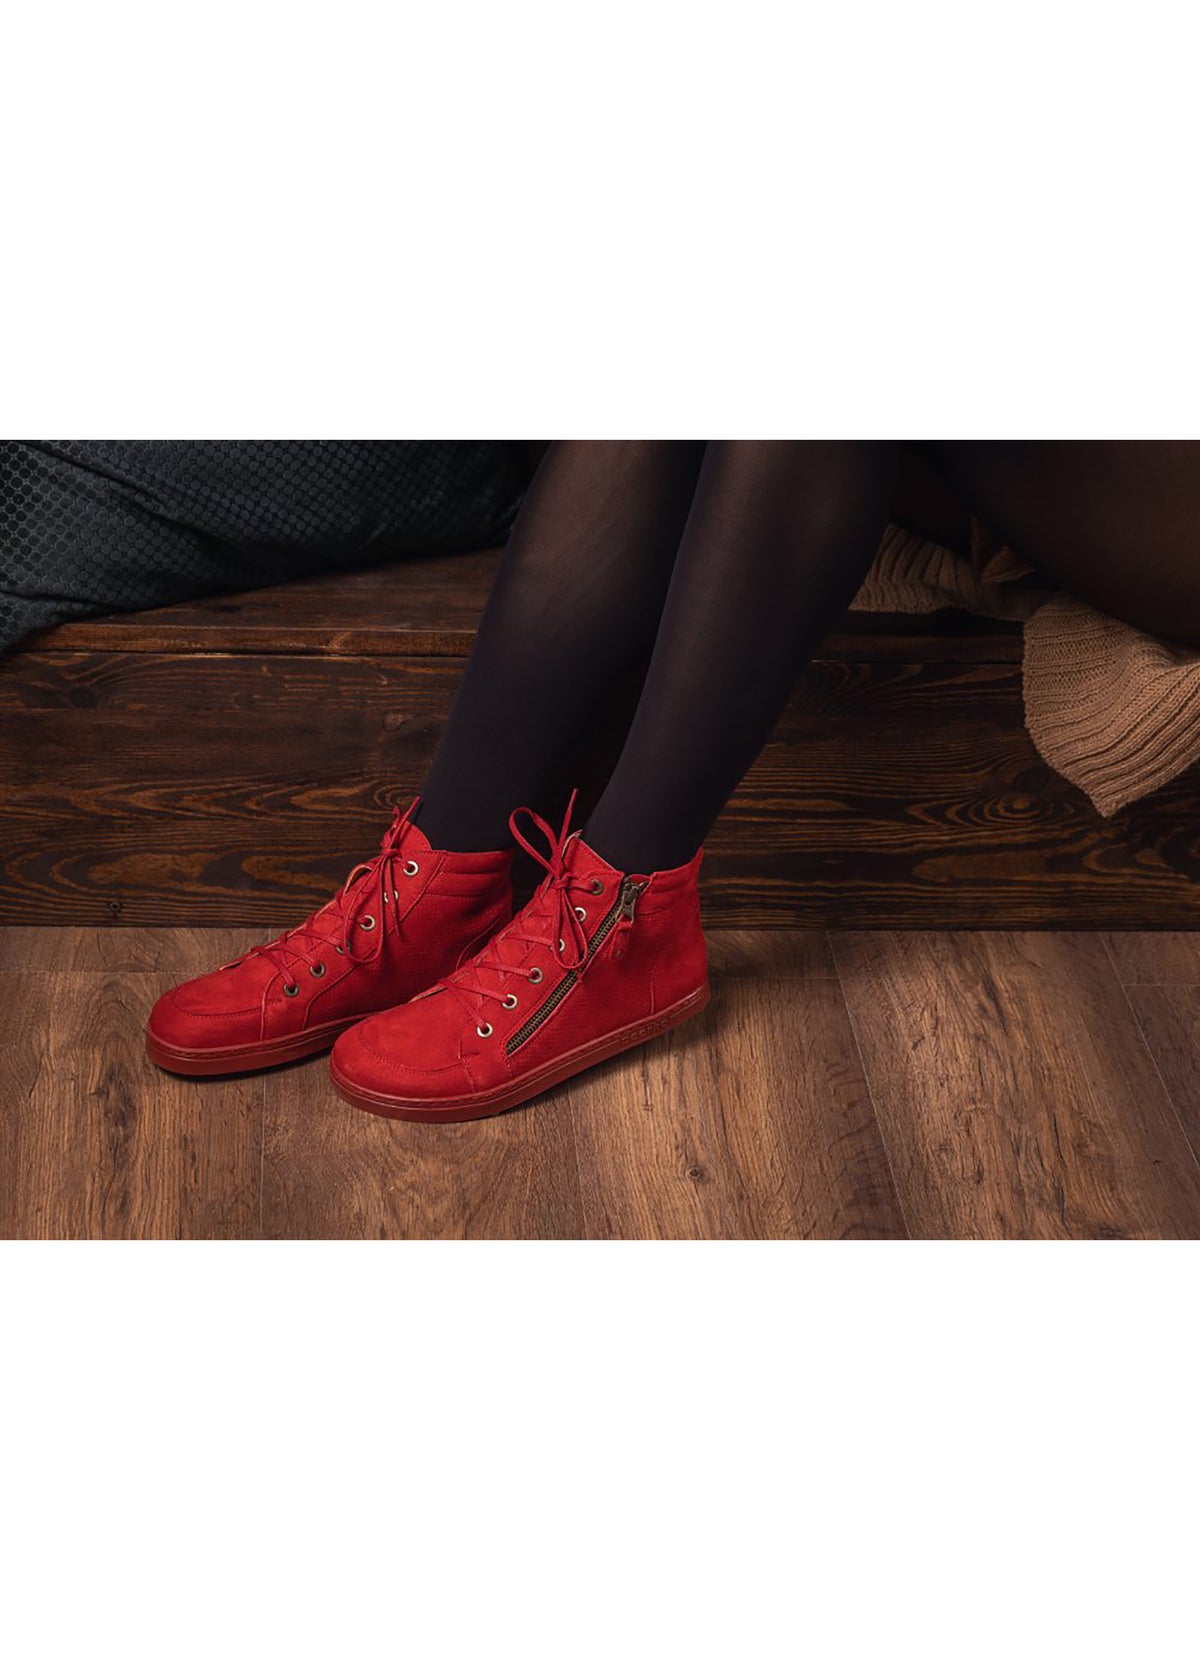 Barfotaskor, High top sneakers - Rex Red